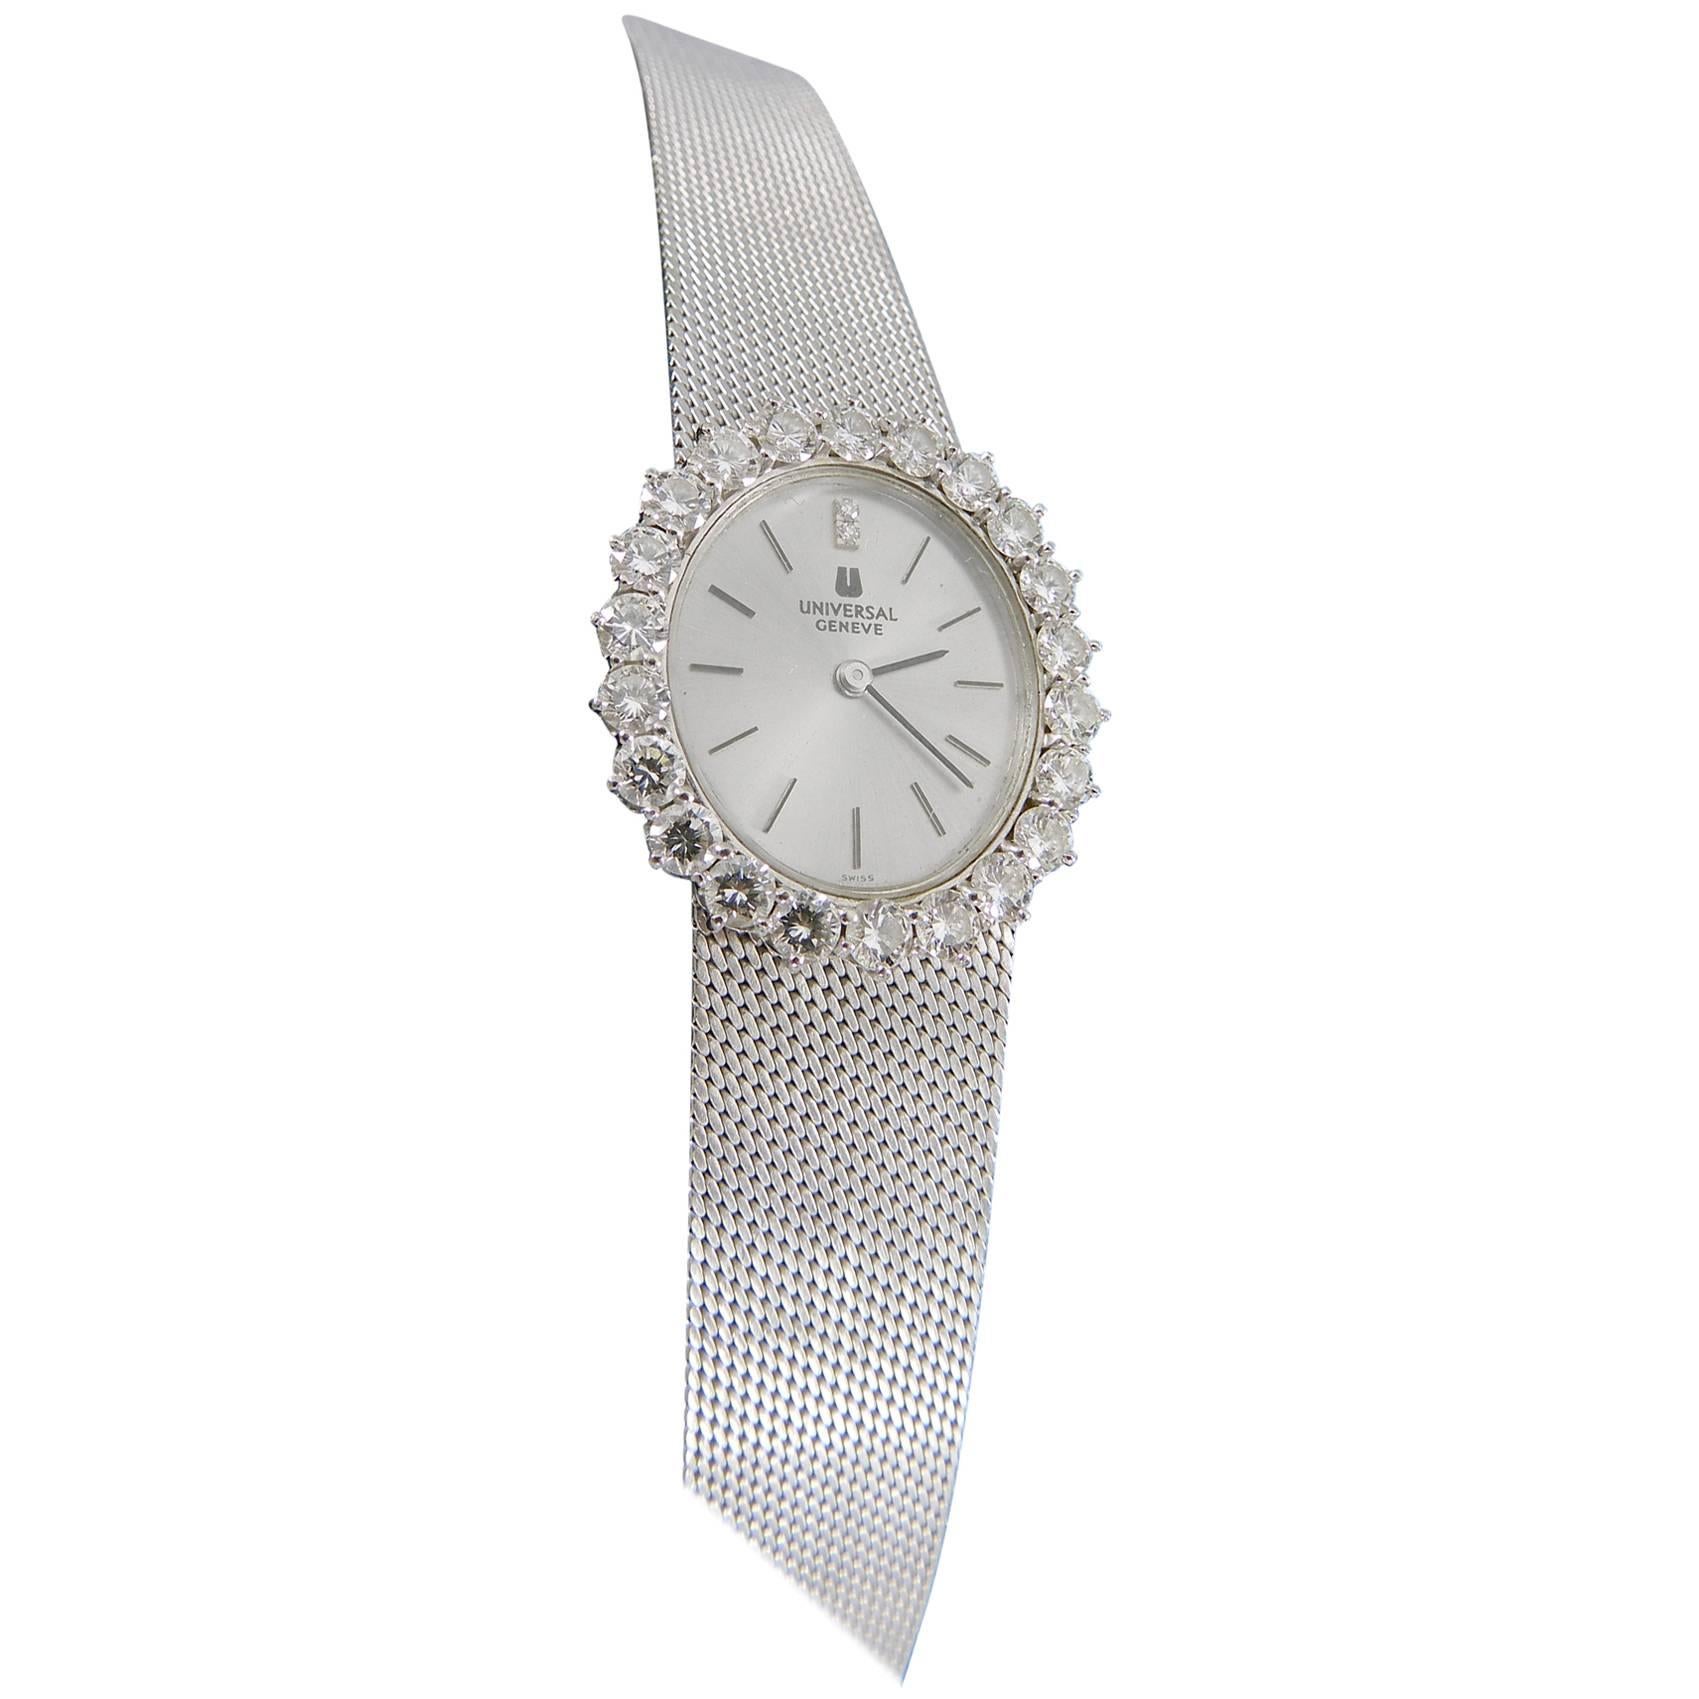 Universal Geneve Ladies White Gold Diamond Manual Wristwatch